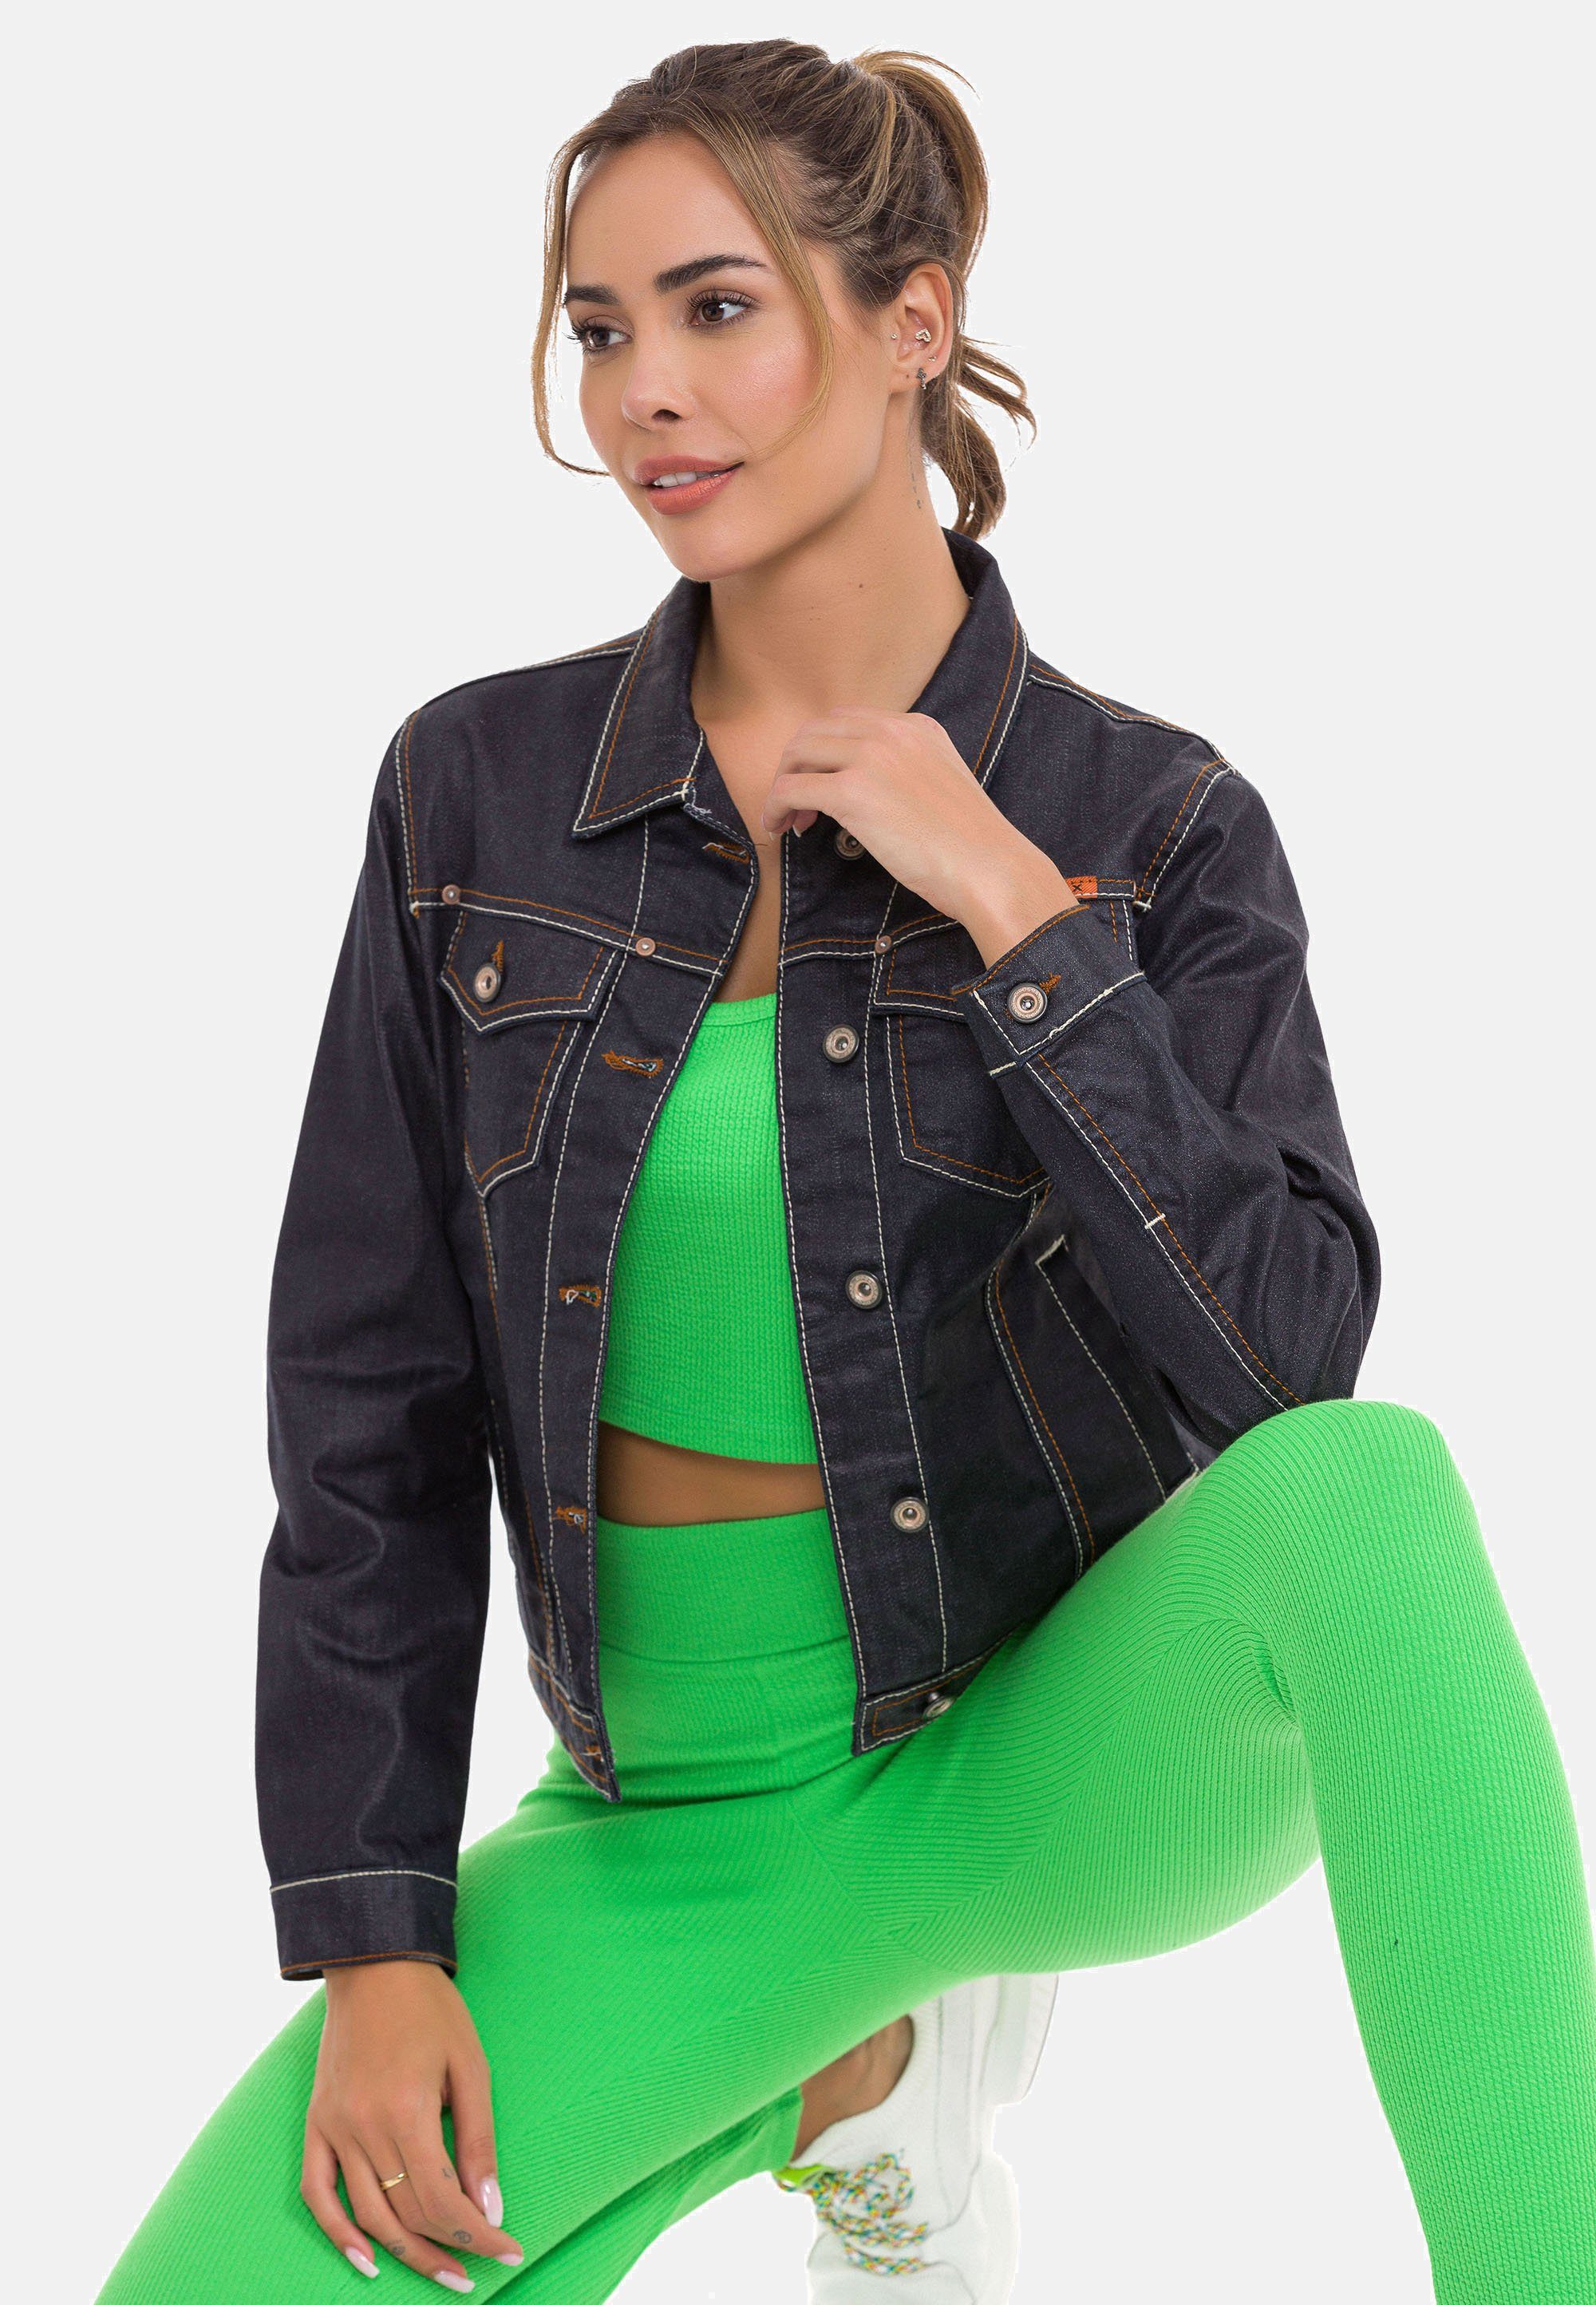 Jeansjacke mit Cipo kontrastfarbenen & Baxx Nähten